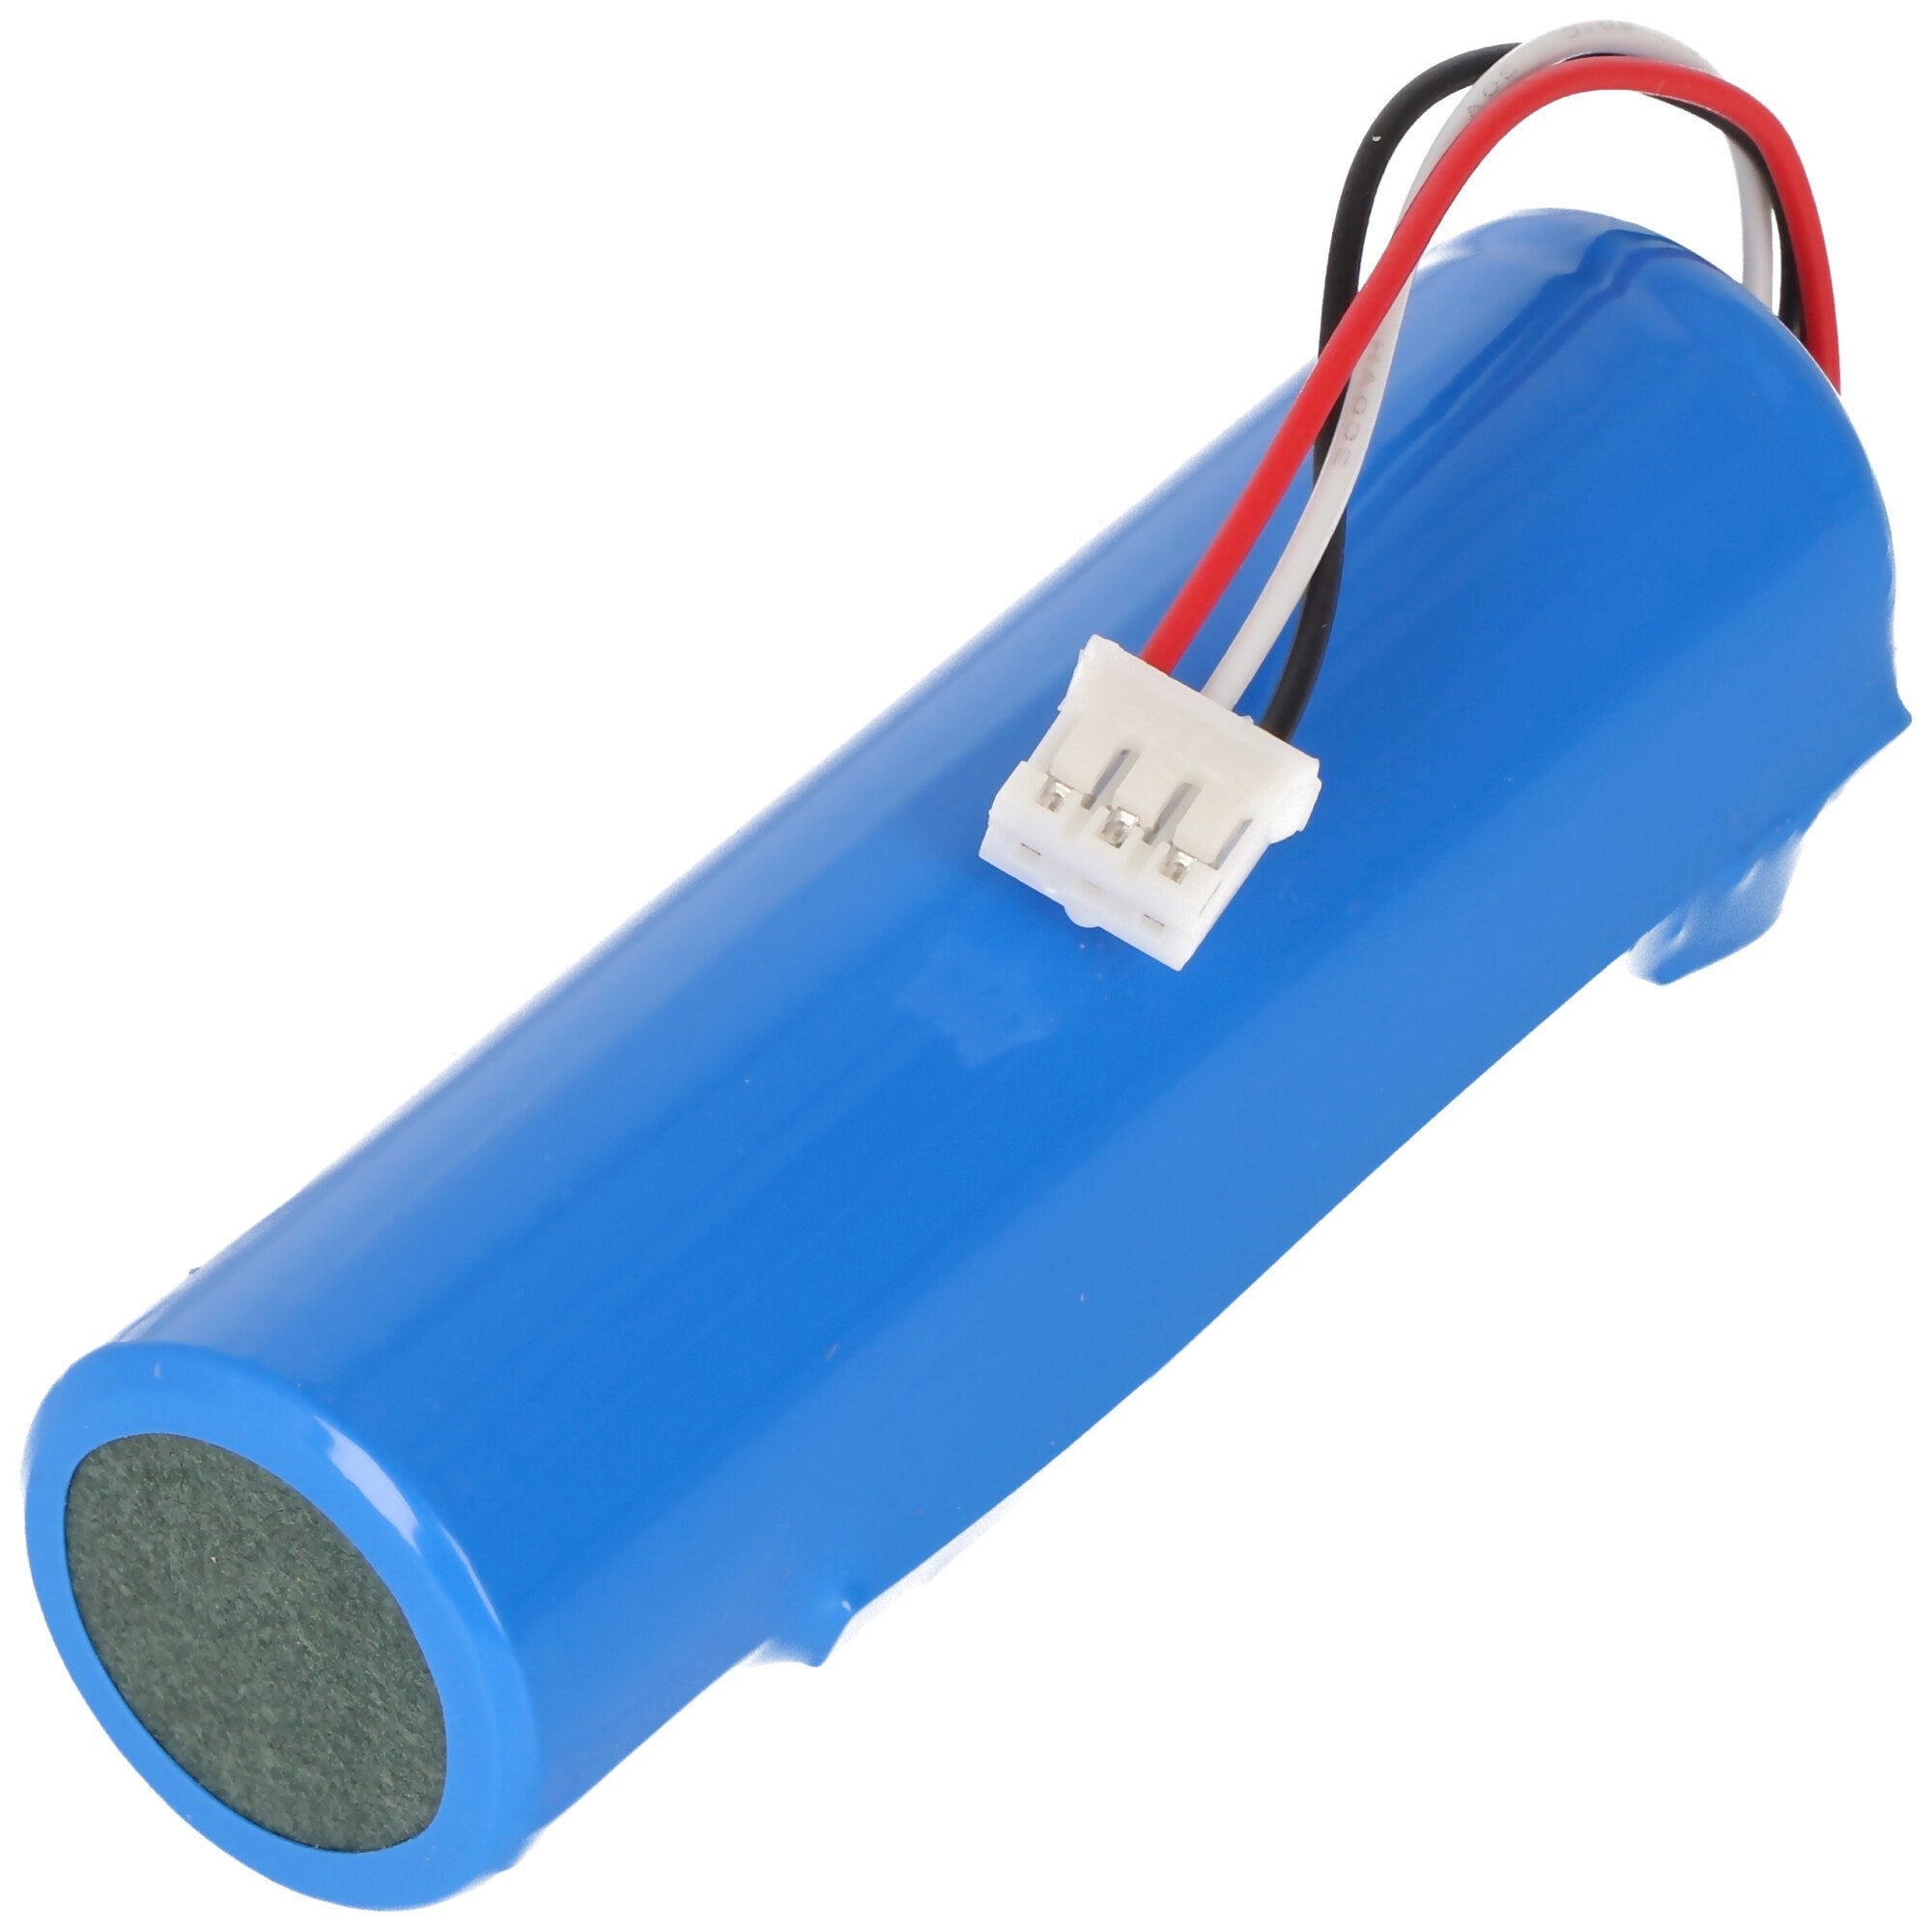 Li-Ion battery - 2200mAh (3.7V) - for remote control like Philips PB9600